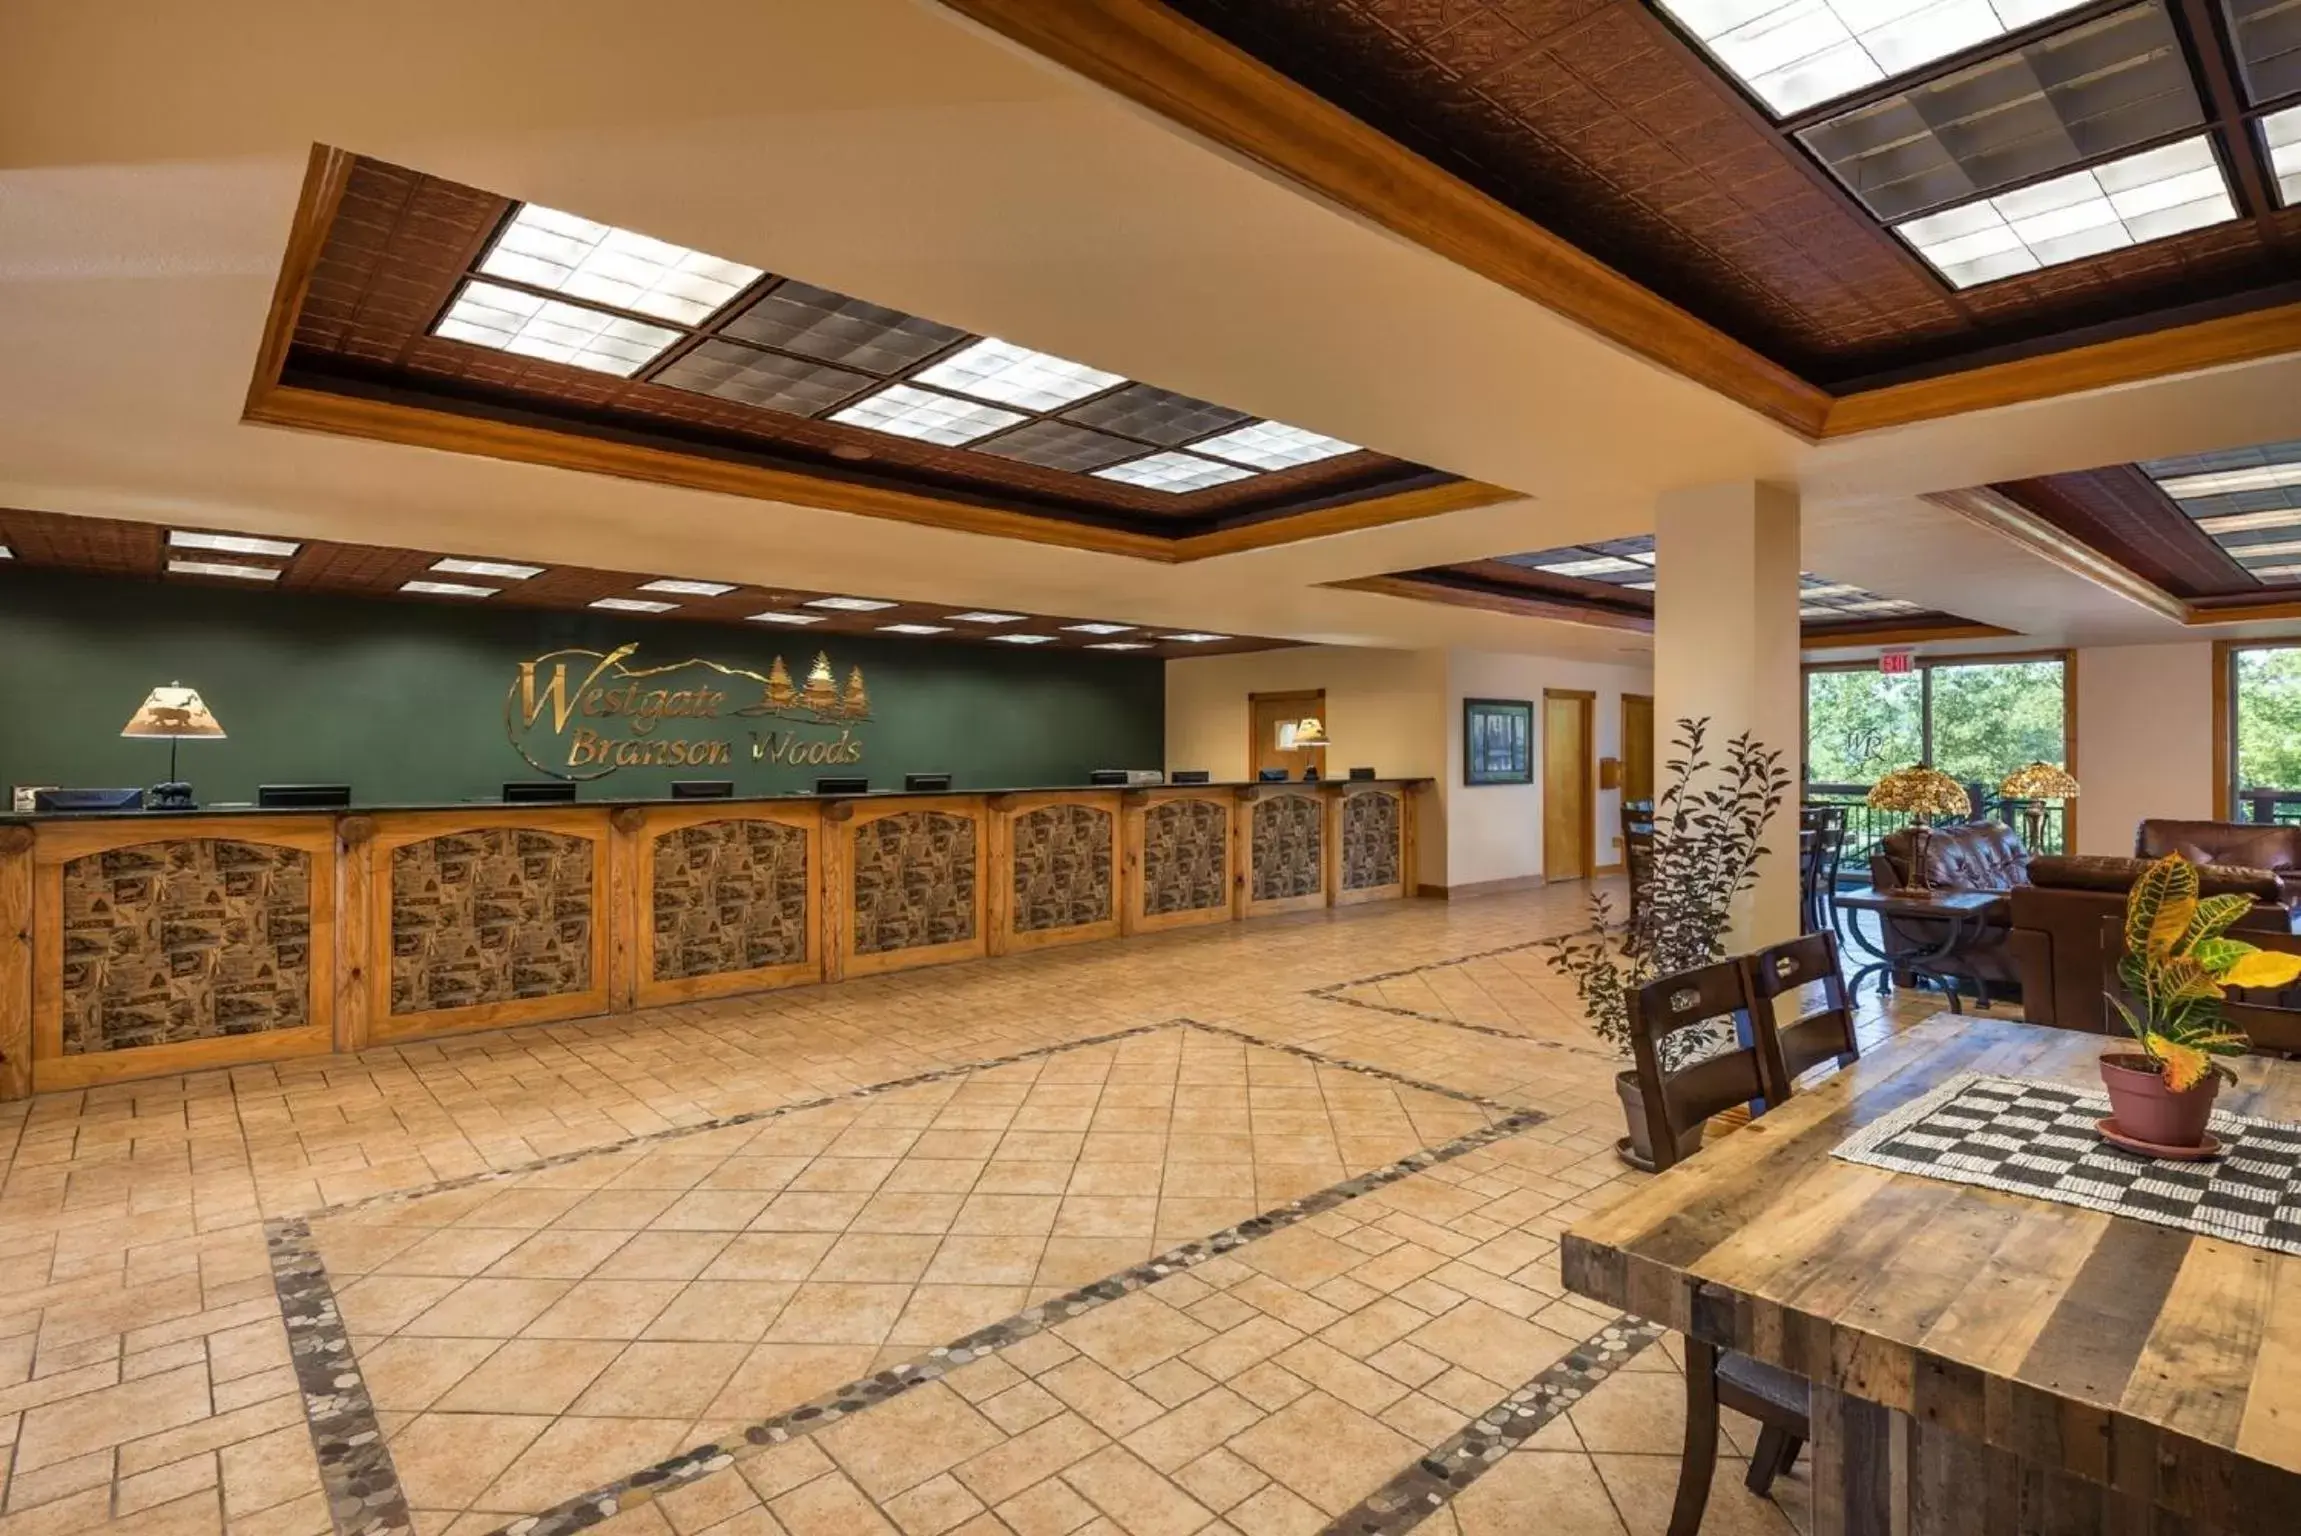 Lobby or reception, Lobby/Reception in Westgate Branson Woods Resort